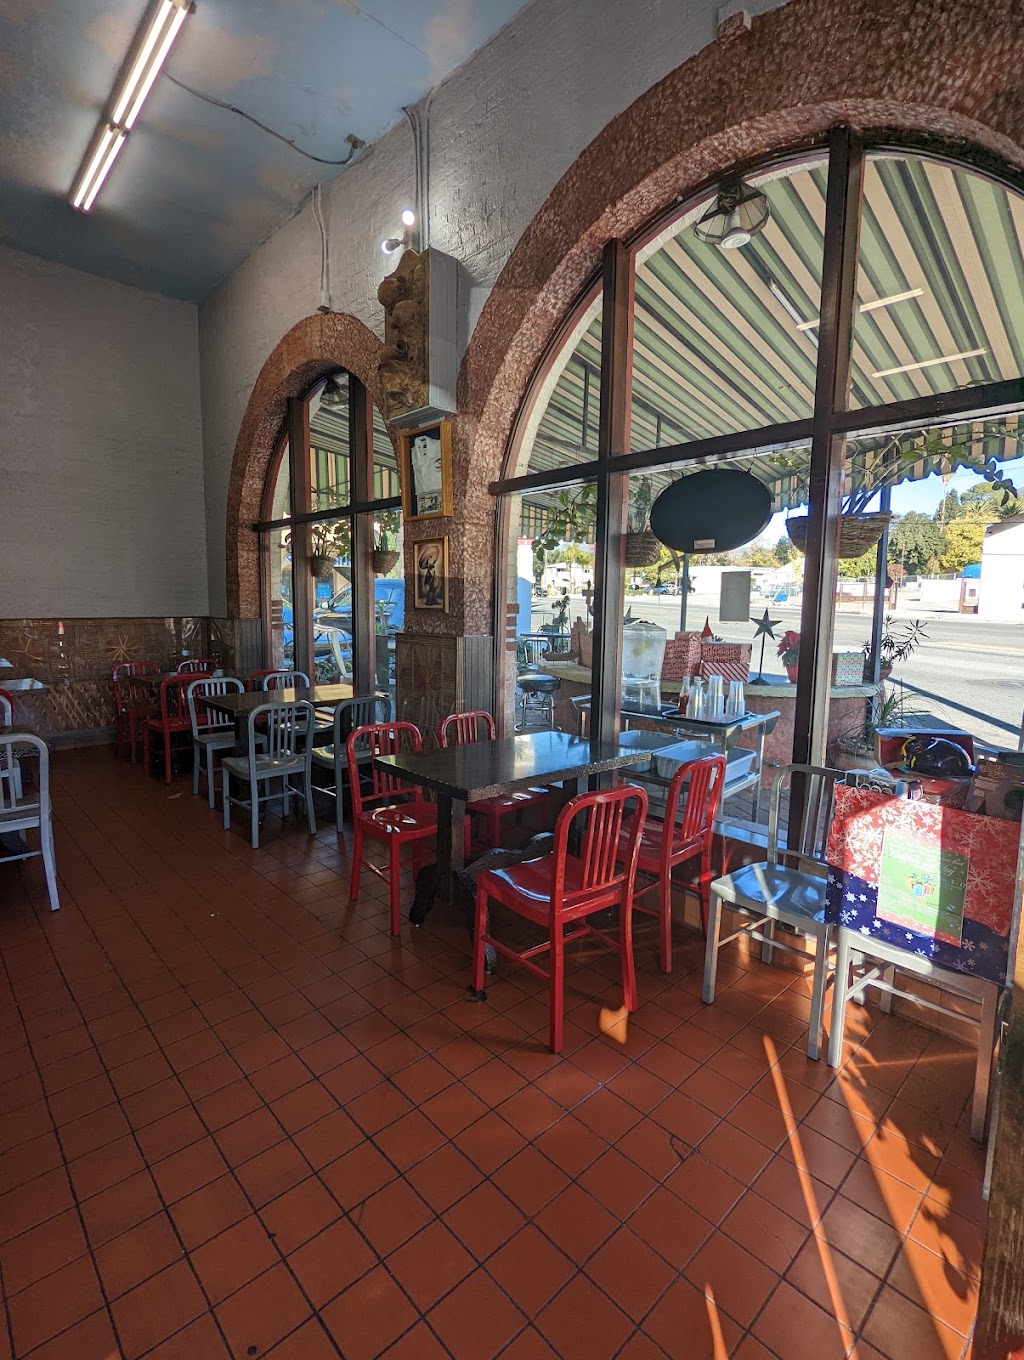 Kings Breakfast & Burgers | 2057 N Los Robles Ave #14, Pasadena, CA 91104, USA | Phone: (626) 529-5262